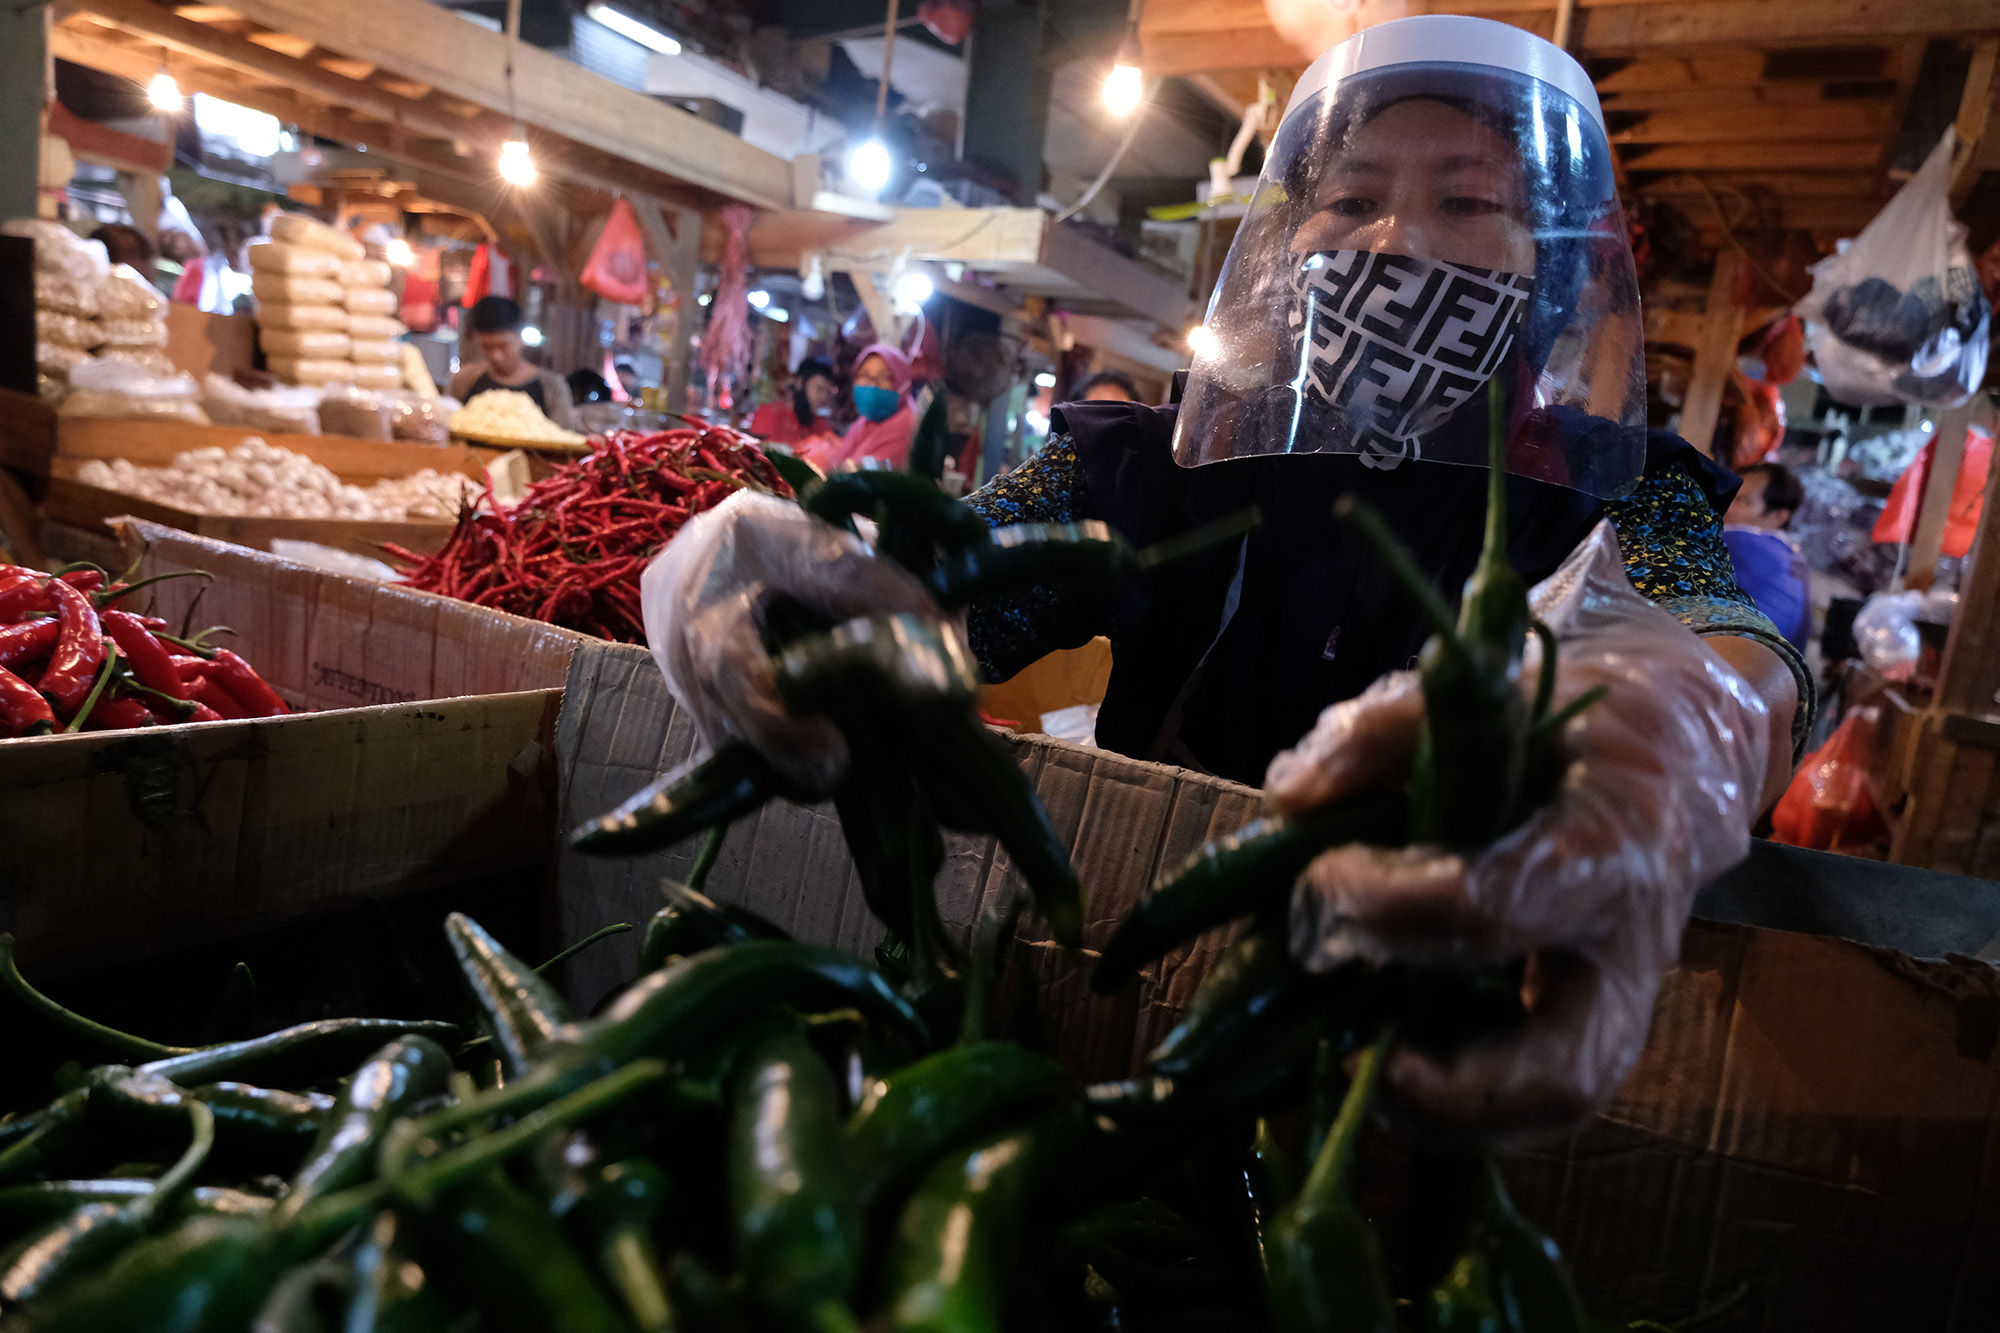 <p>Pedagang mengenakan face shield dan sarung tangan menata barang dagangannya di los sayuran Pasar Senen, Jakarta, 1 Juni 2020. Kementerian Perdagangan menyiapkan pedoman bagi penyelenggara kegiatan perdagangan untuk diterapkan pada saat kenormalan baru (new normal). Saat era new normal, para pedagang di pasar rakyat diwajibkan menggunakan masker, face shield, dan sarung tangan selama beraktivitas. Selain itu, kegiatan pasar juga hanya diperbolehkan pada pukul 06.00 hingga 11.00. Para pedagang yang diperbolehkan berjualan adalah mereka yang memiliki suhu tubuh di bawah 37,3 derajat celcius. Foto: Ismail Pohan/TrenAsia</p>
